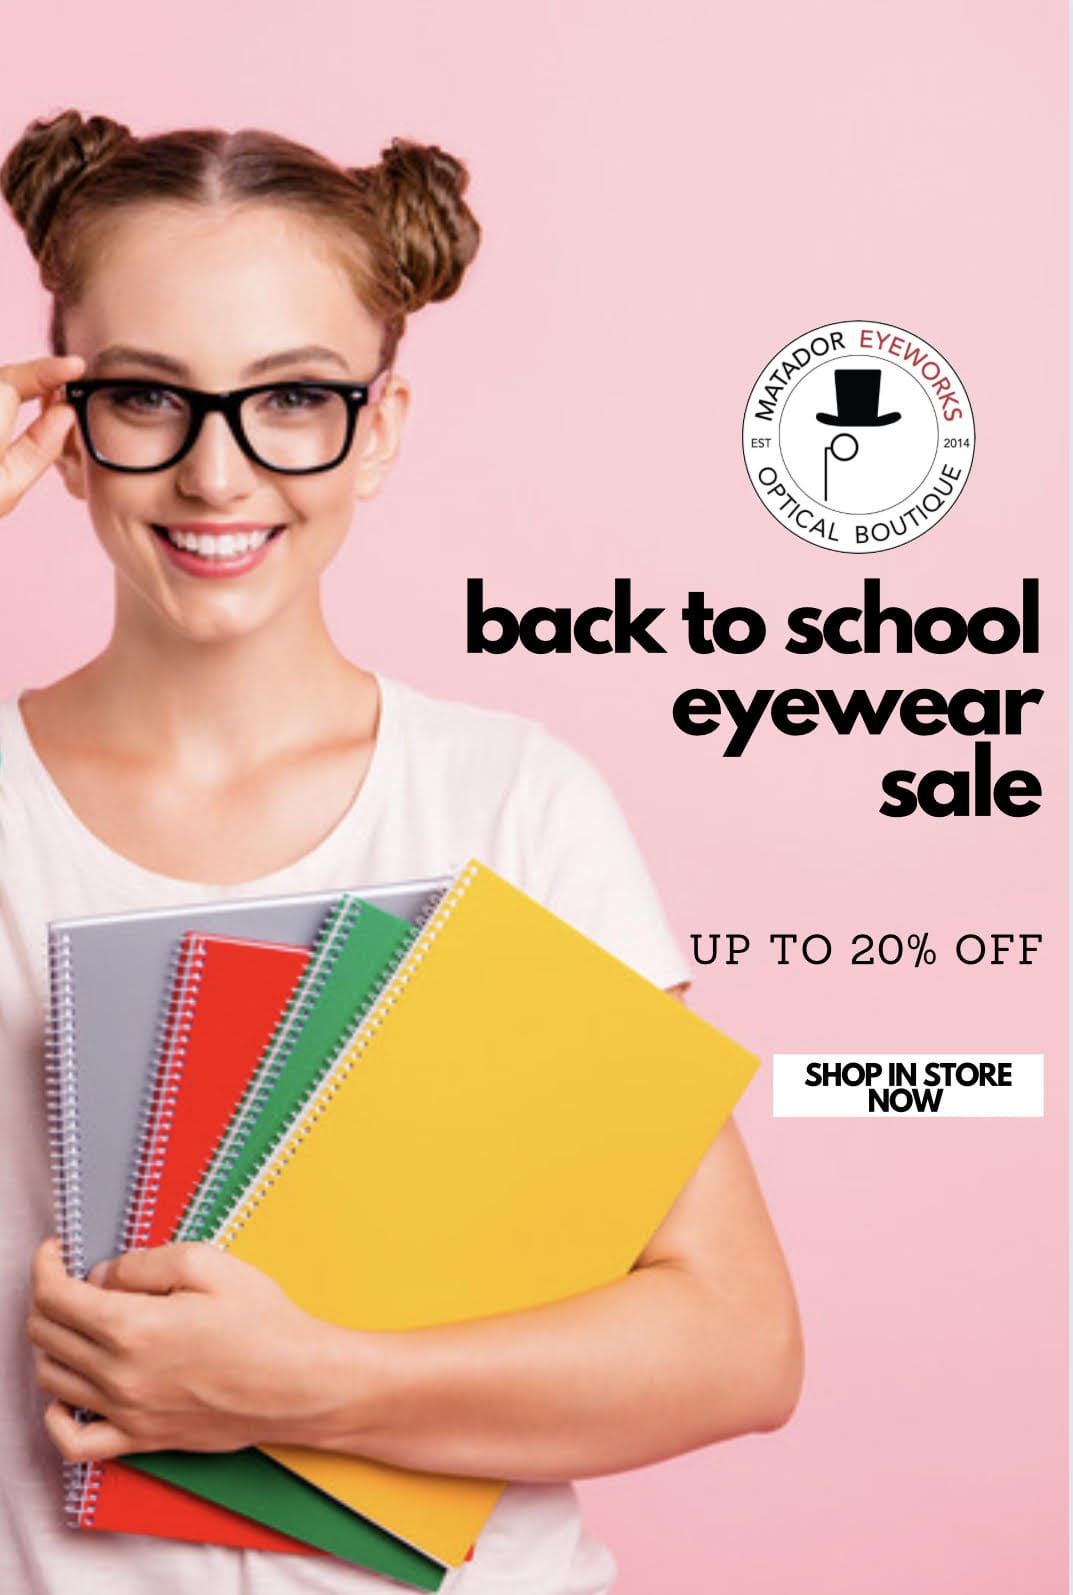 eyewear sale for students back to school